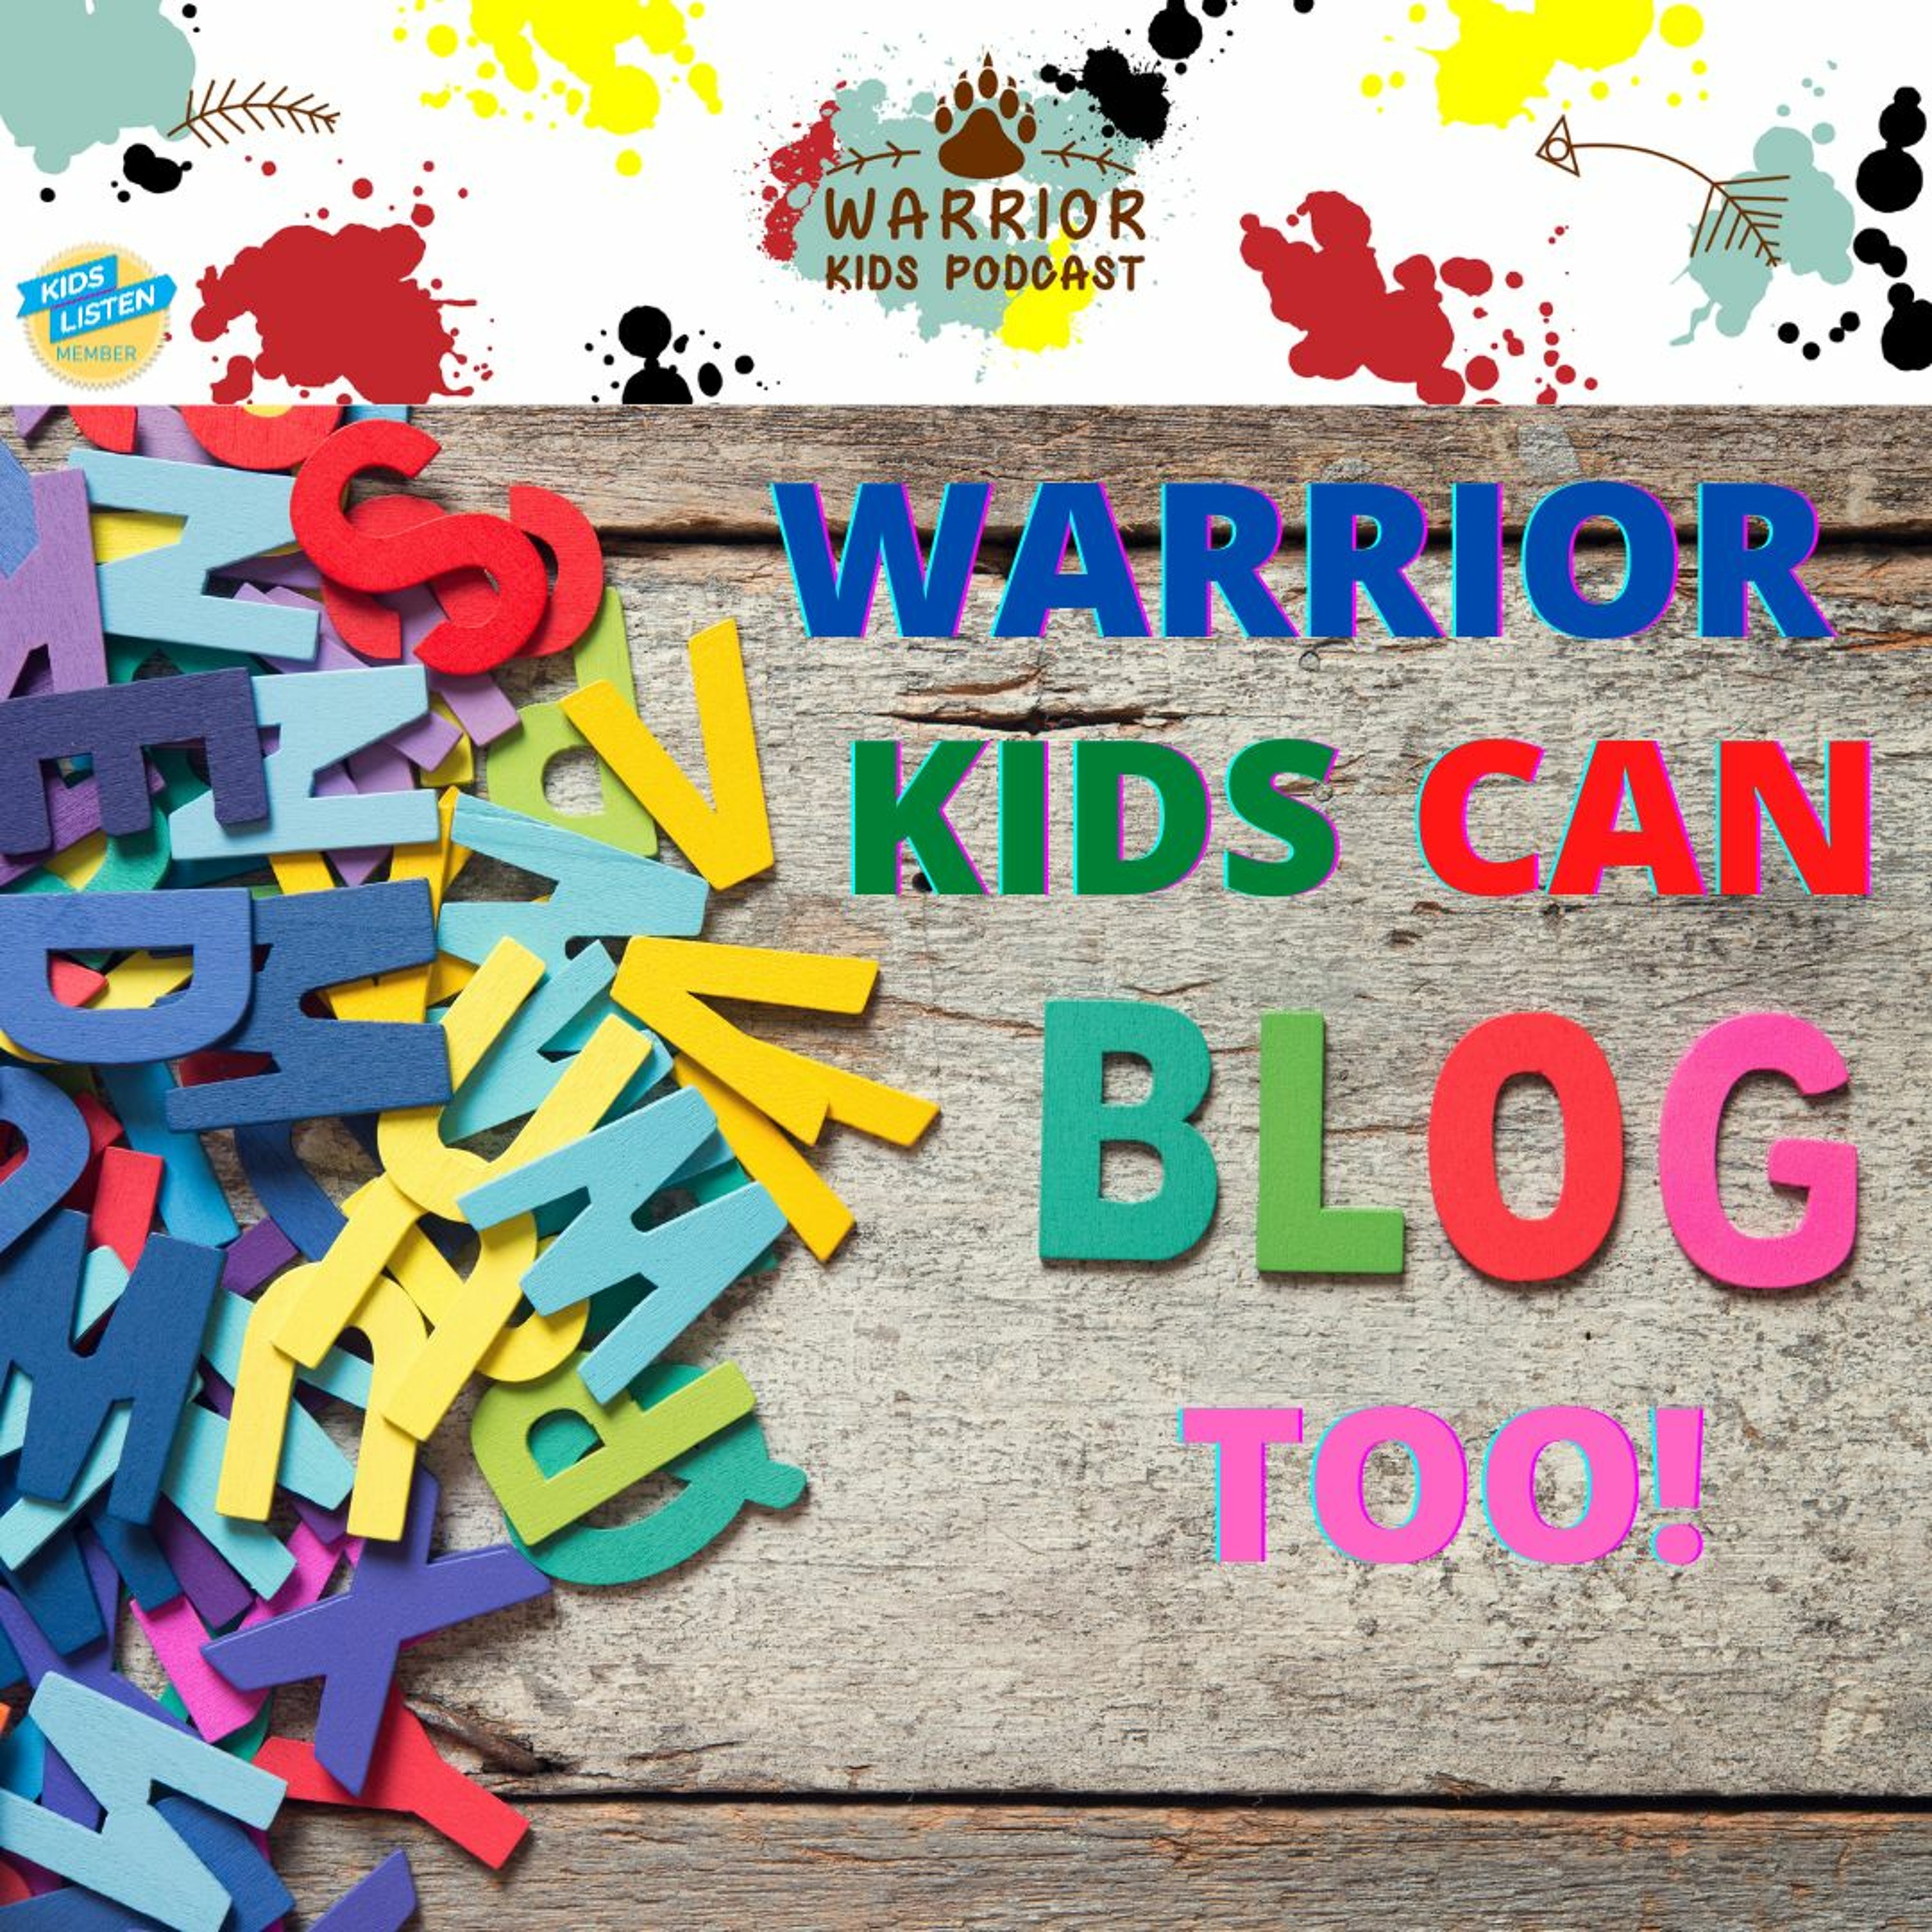 Warrior Kids Can Blog Too!